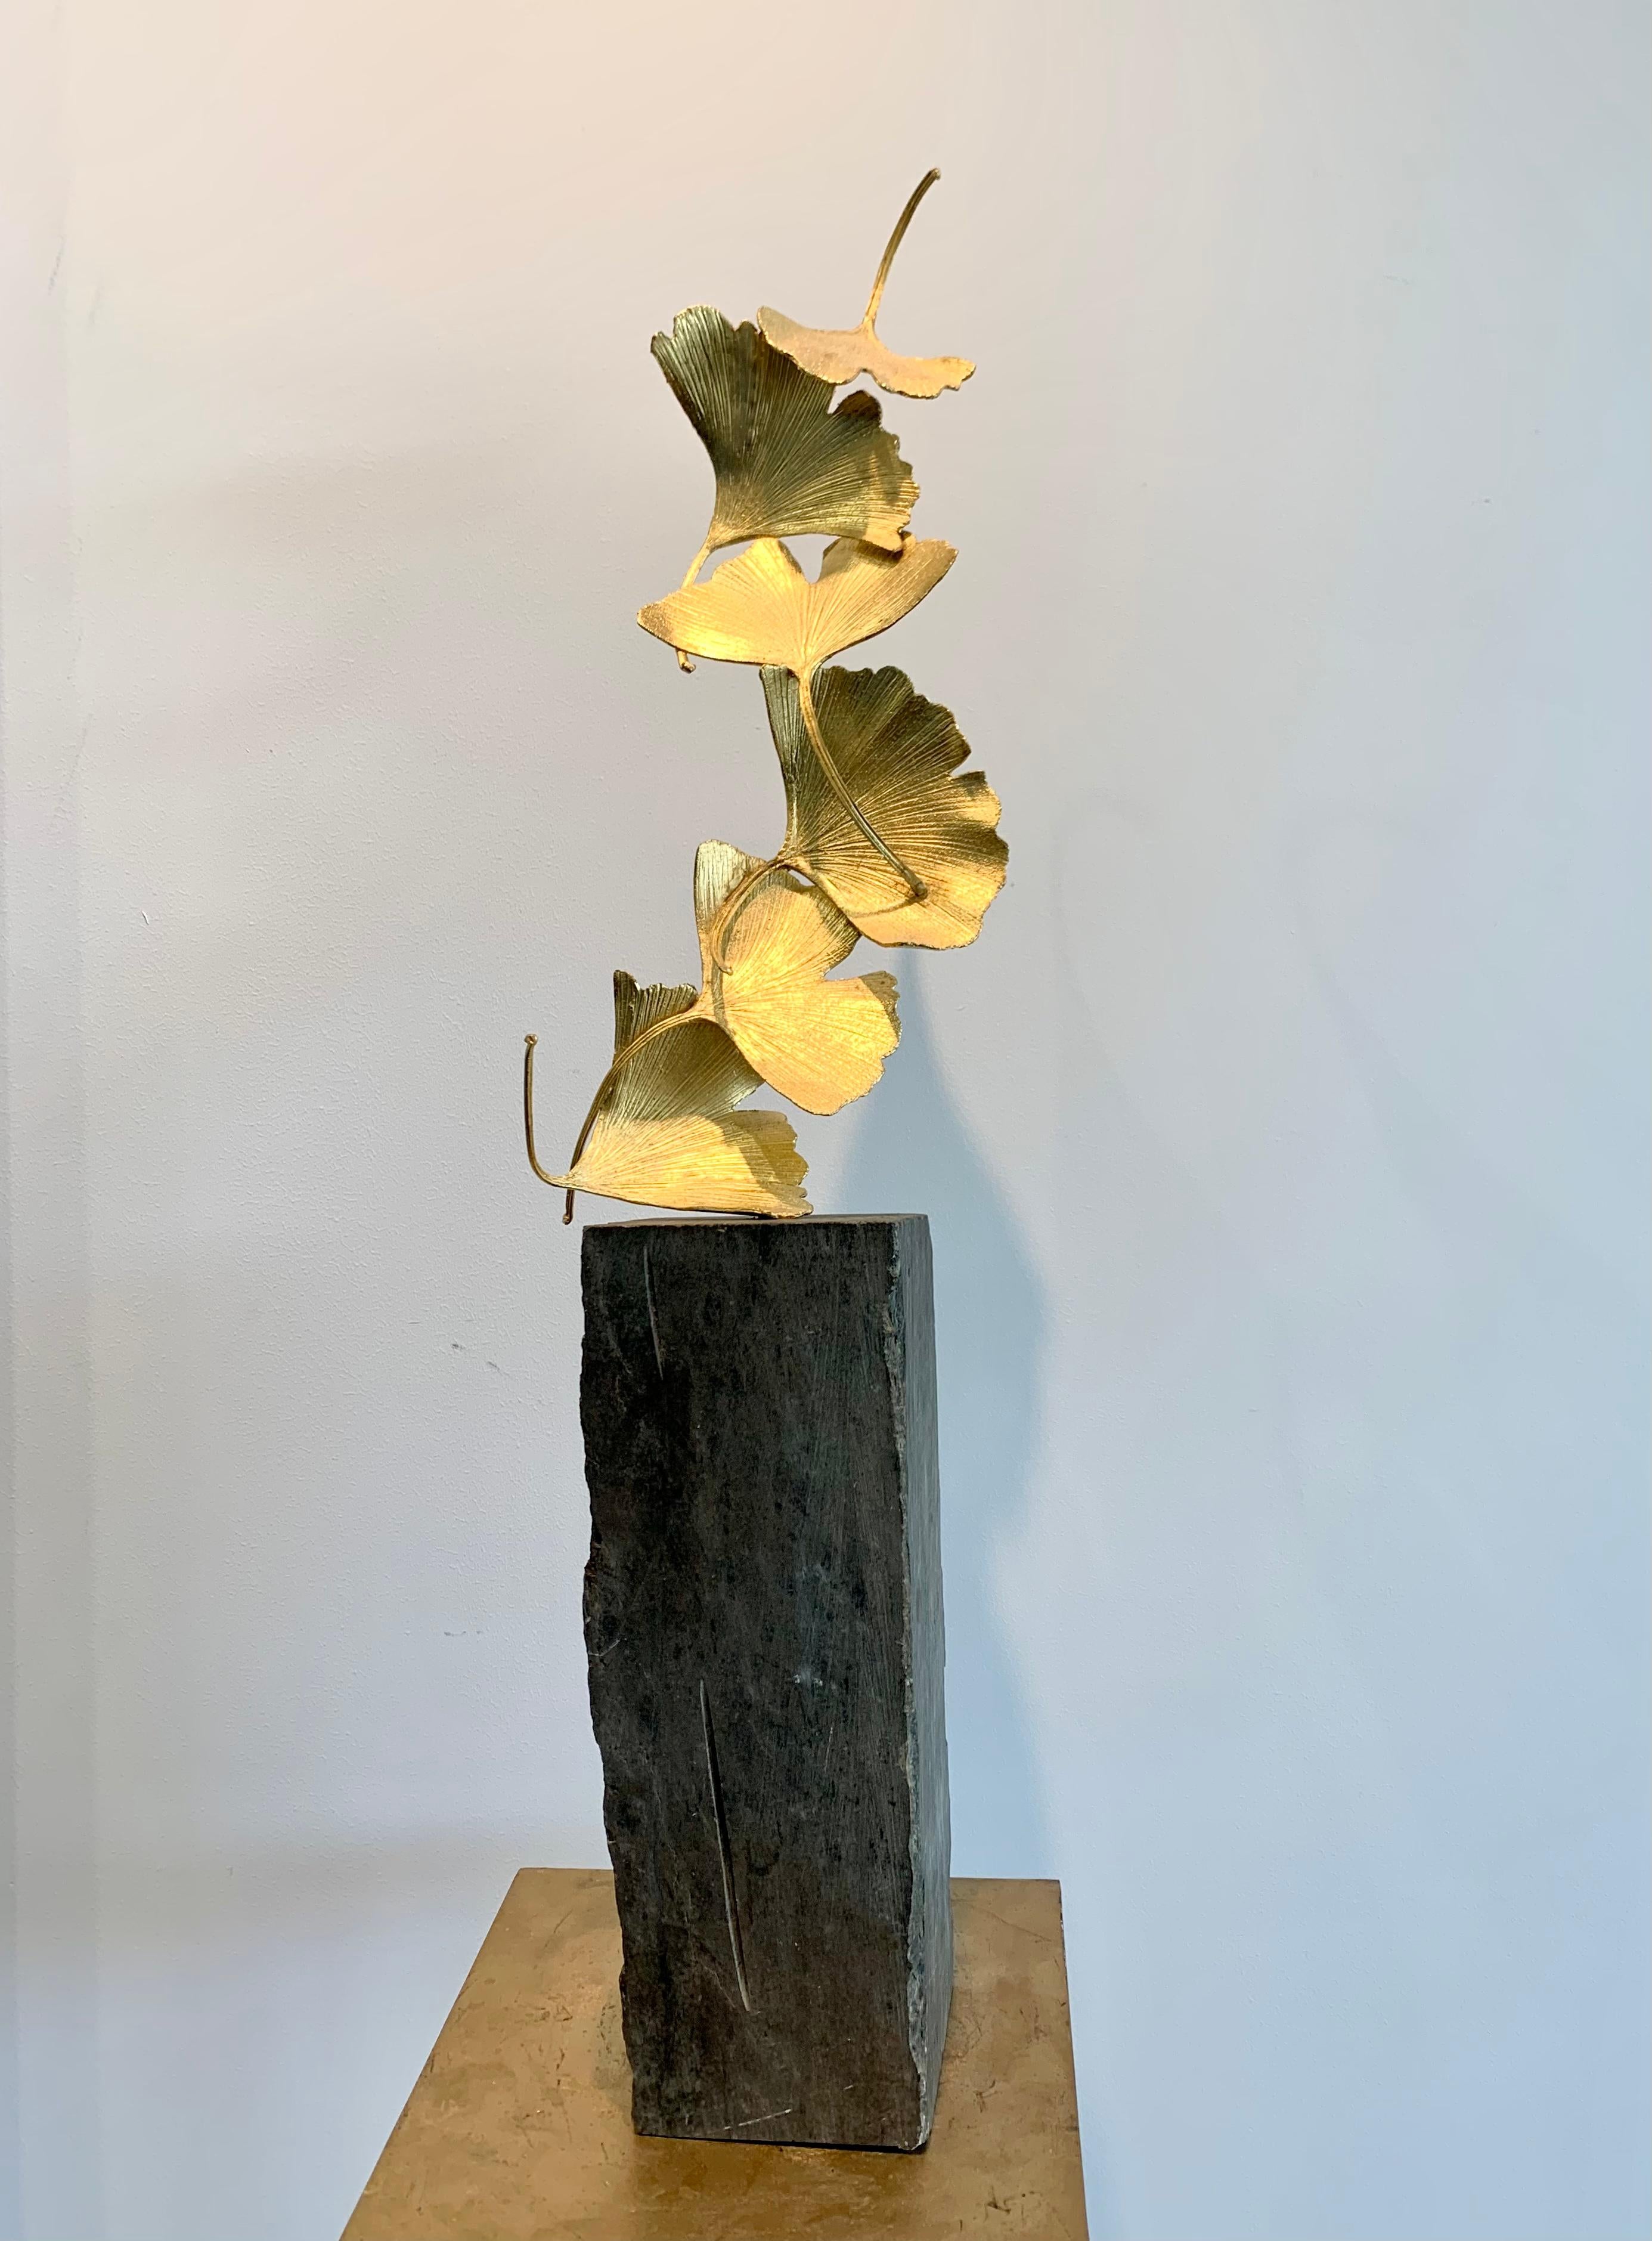 6 Golden Gingko Leaves - 24 k Gilded Cast Brass sculpture on rough stone base